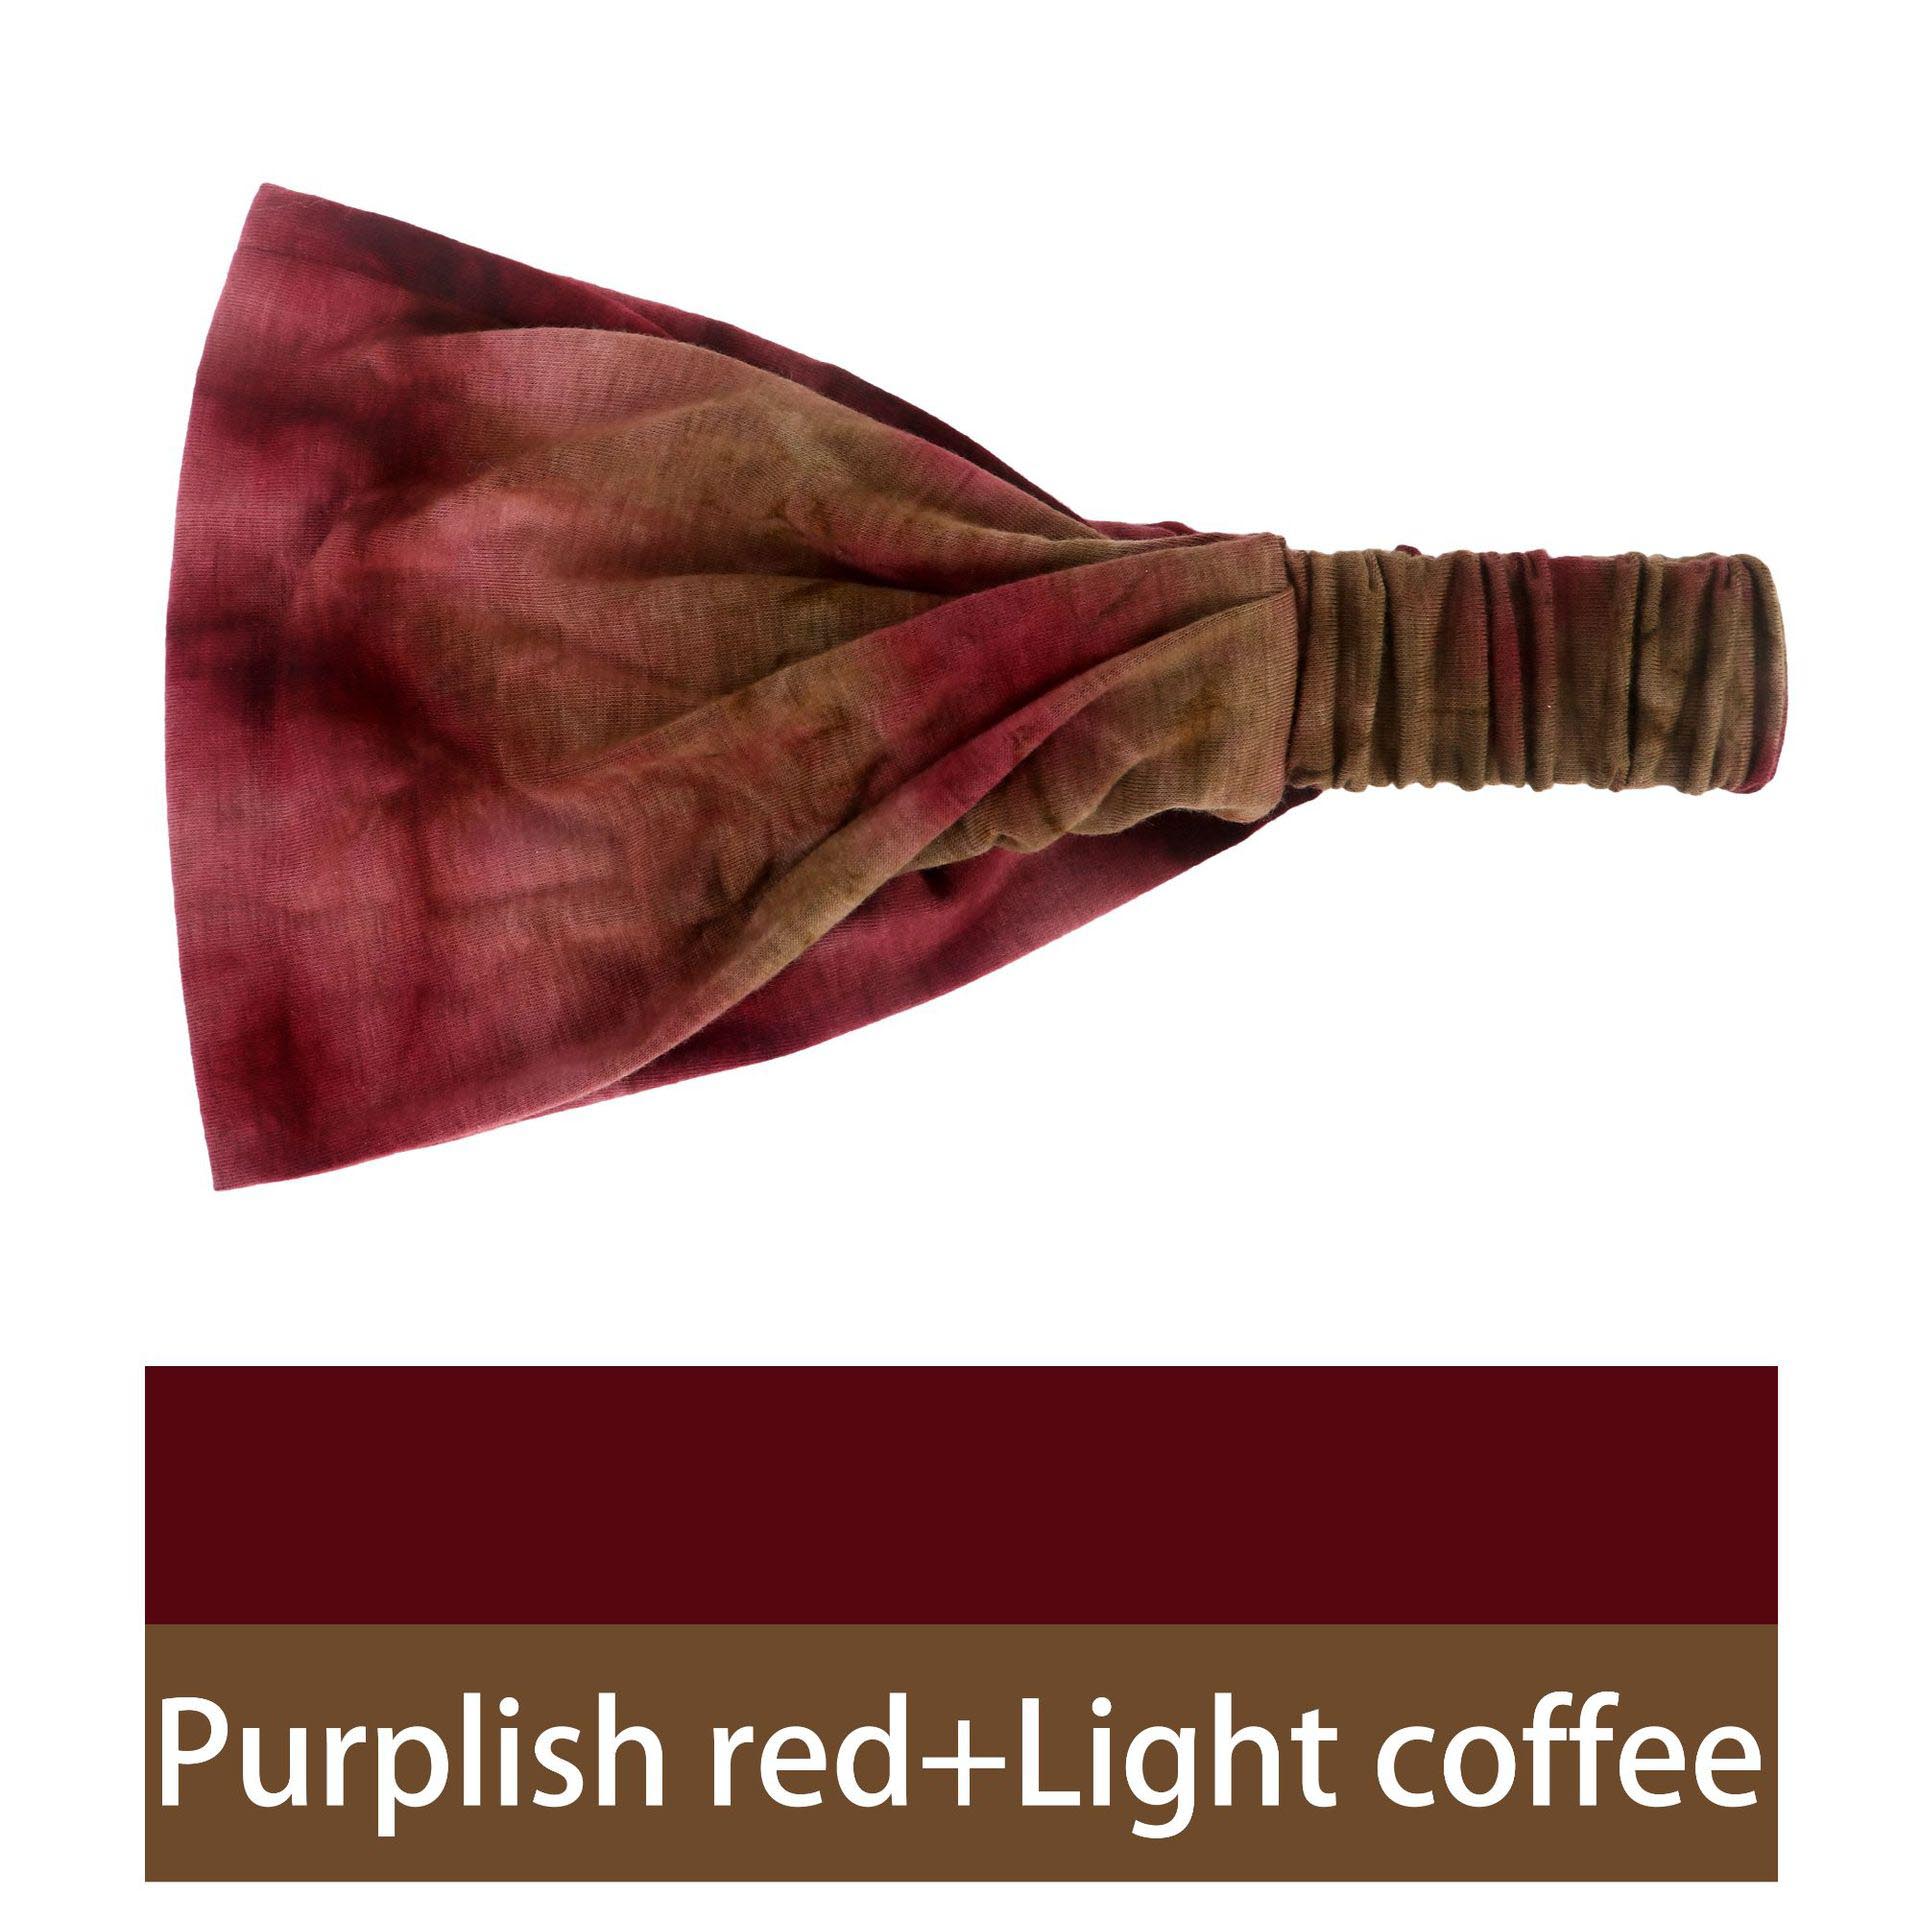 Purlish and light coffee